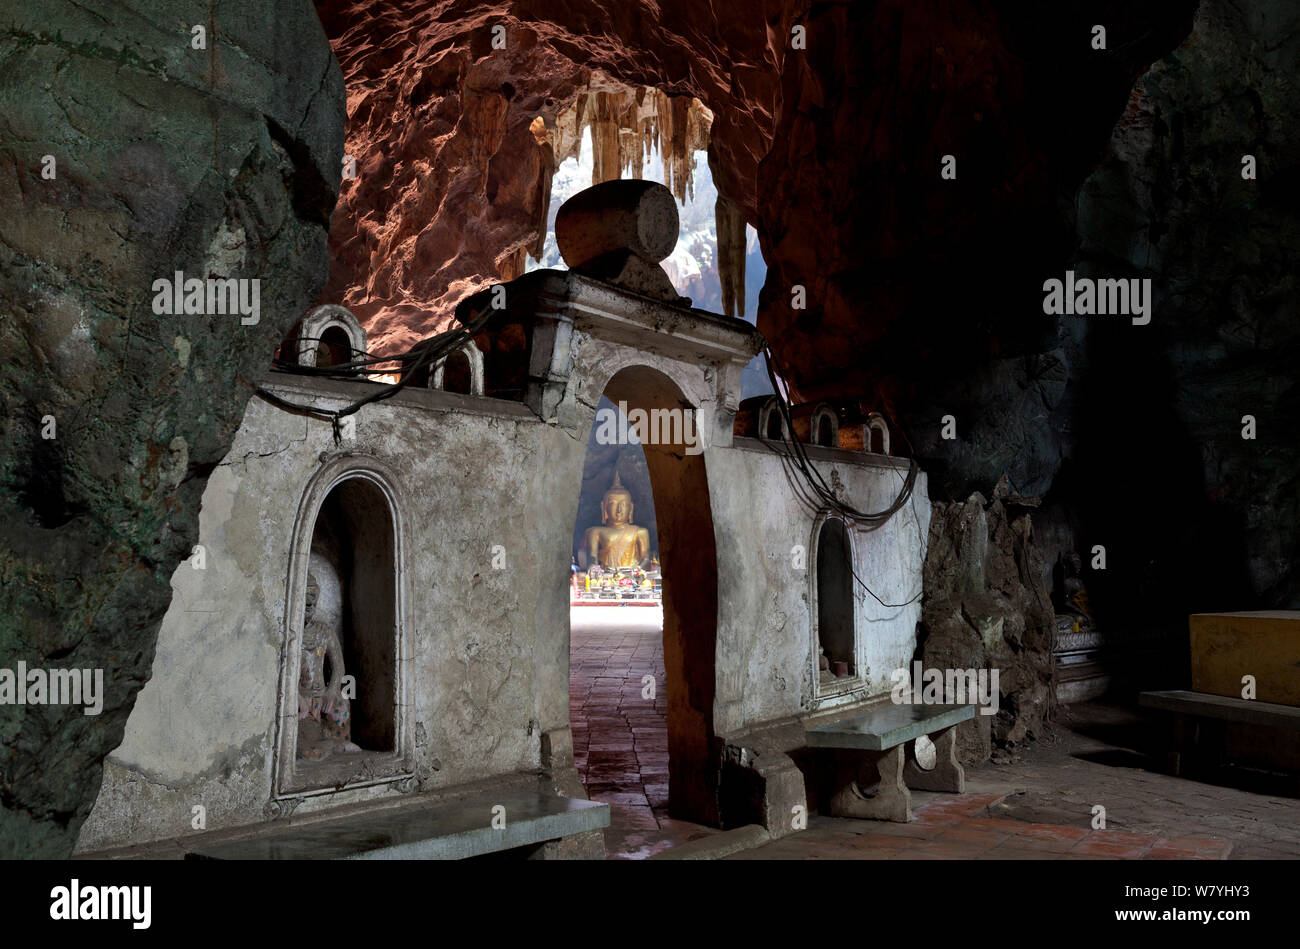 Buddhist shrine in Khao Luang Cave with daylight lighting up figure of the Buddha. Phetchaburi, Thailand, September 2014. Stock Photo